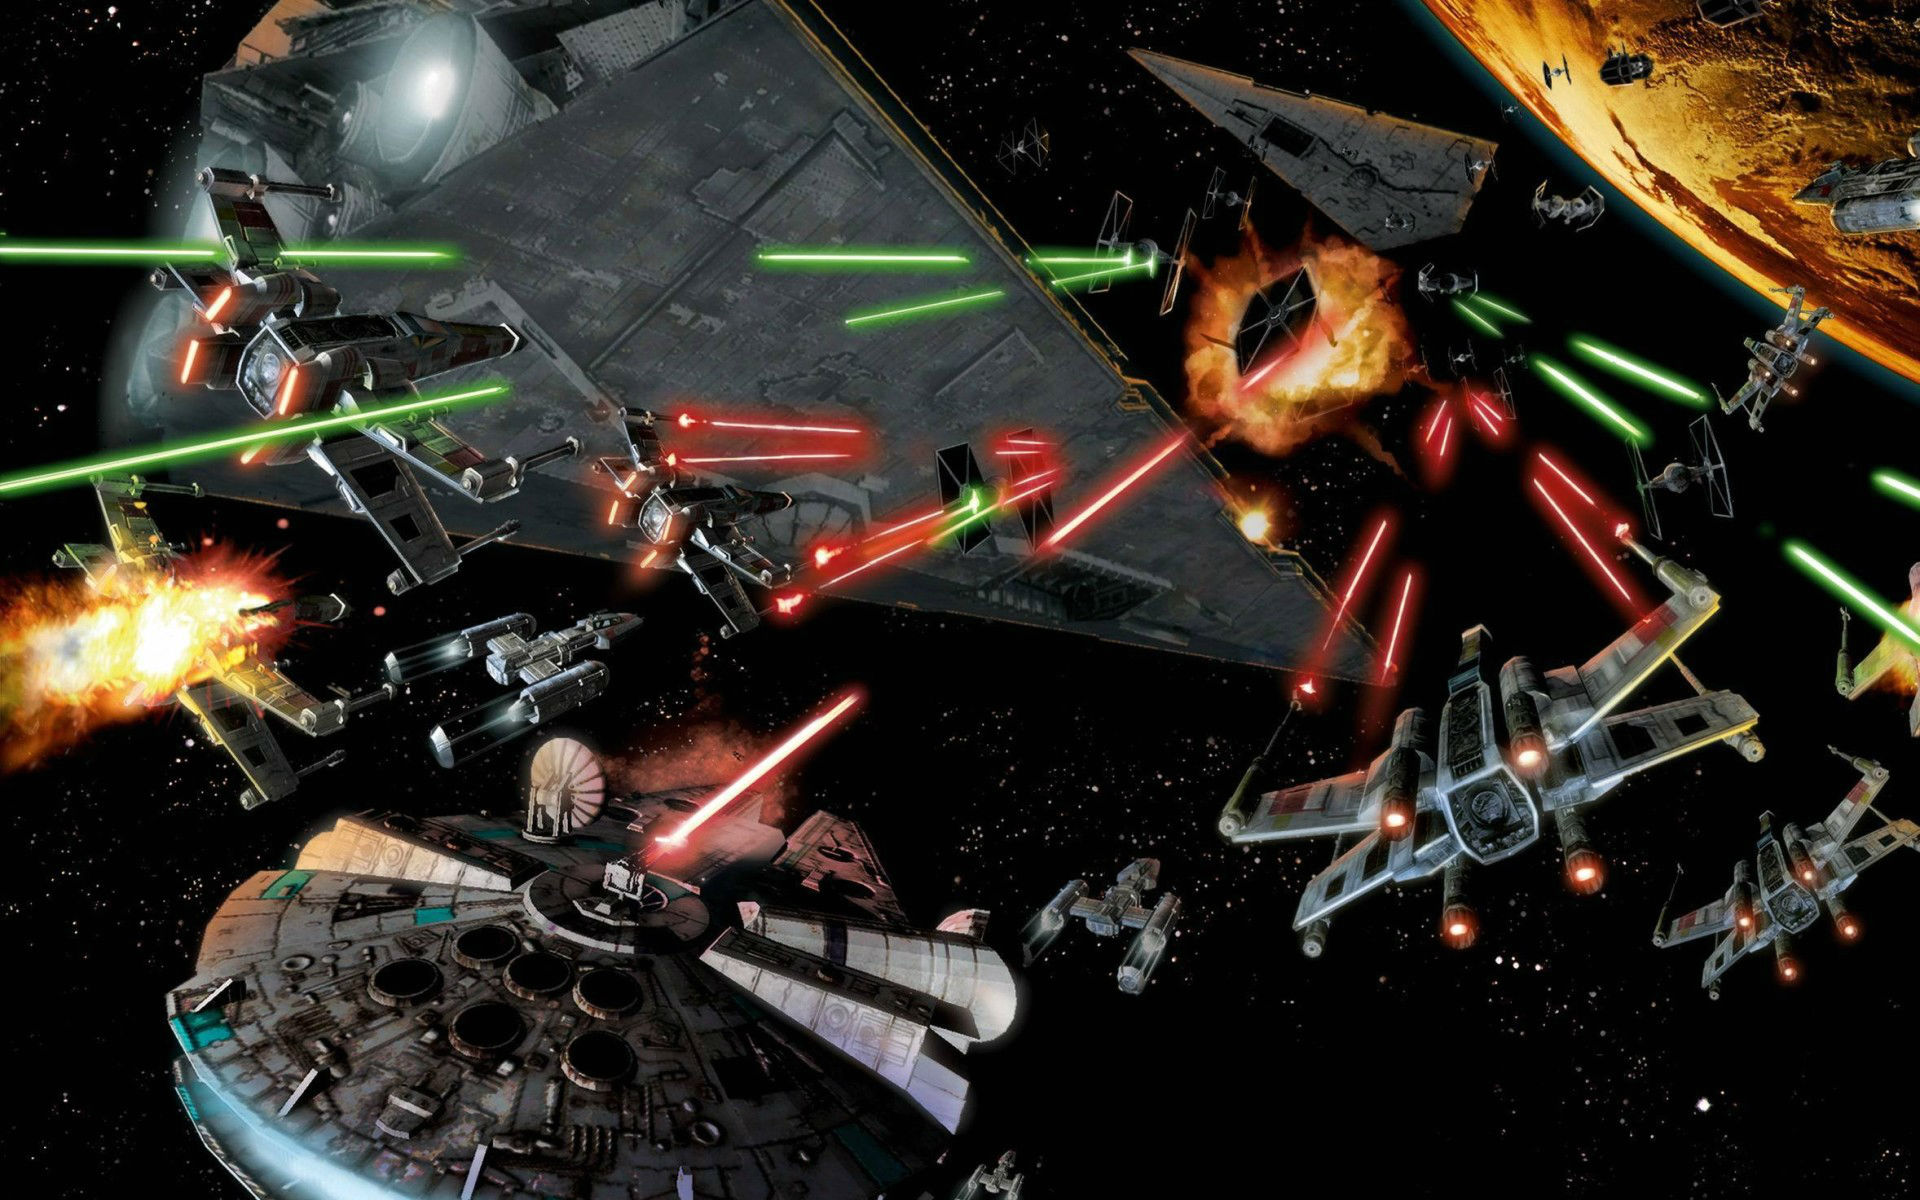 Space Battle Star Wars Millennium Falcon Art Wallpaper Background